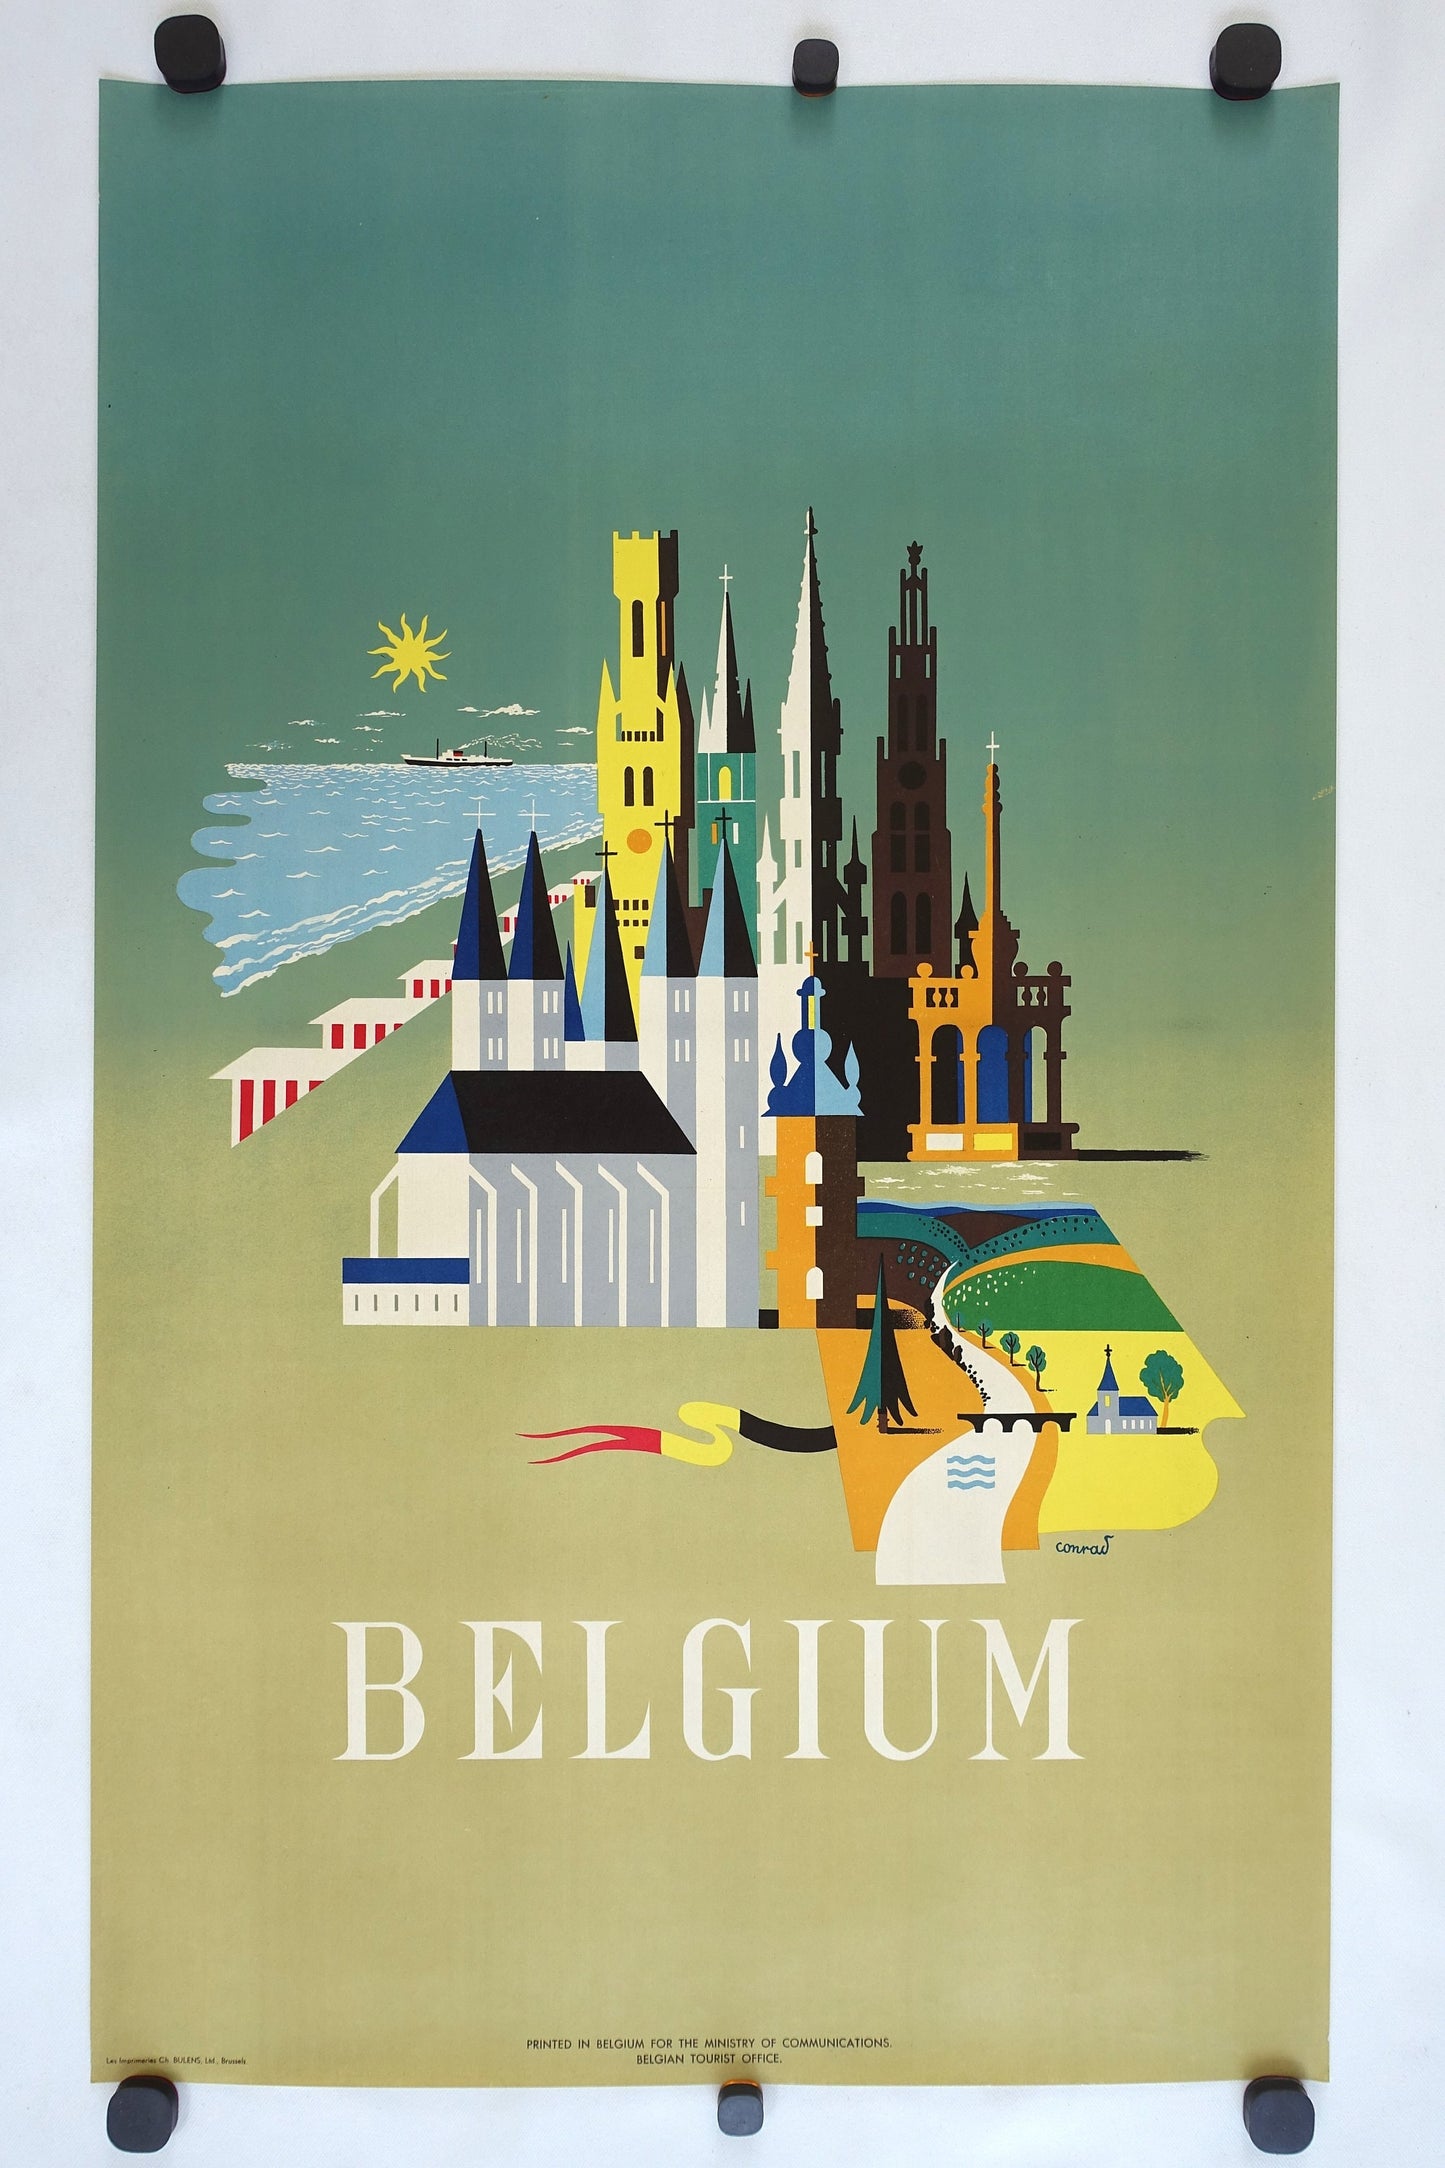 1950 Belgium Travel Poster by Conrad - Original Vintage Poster